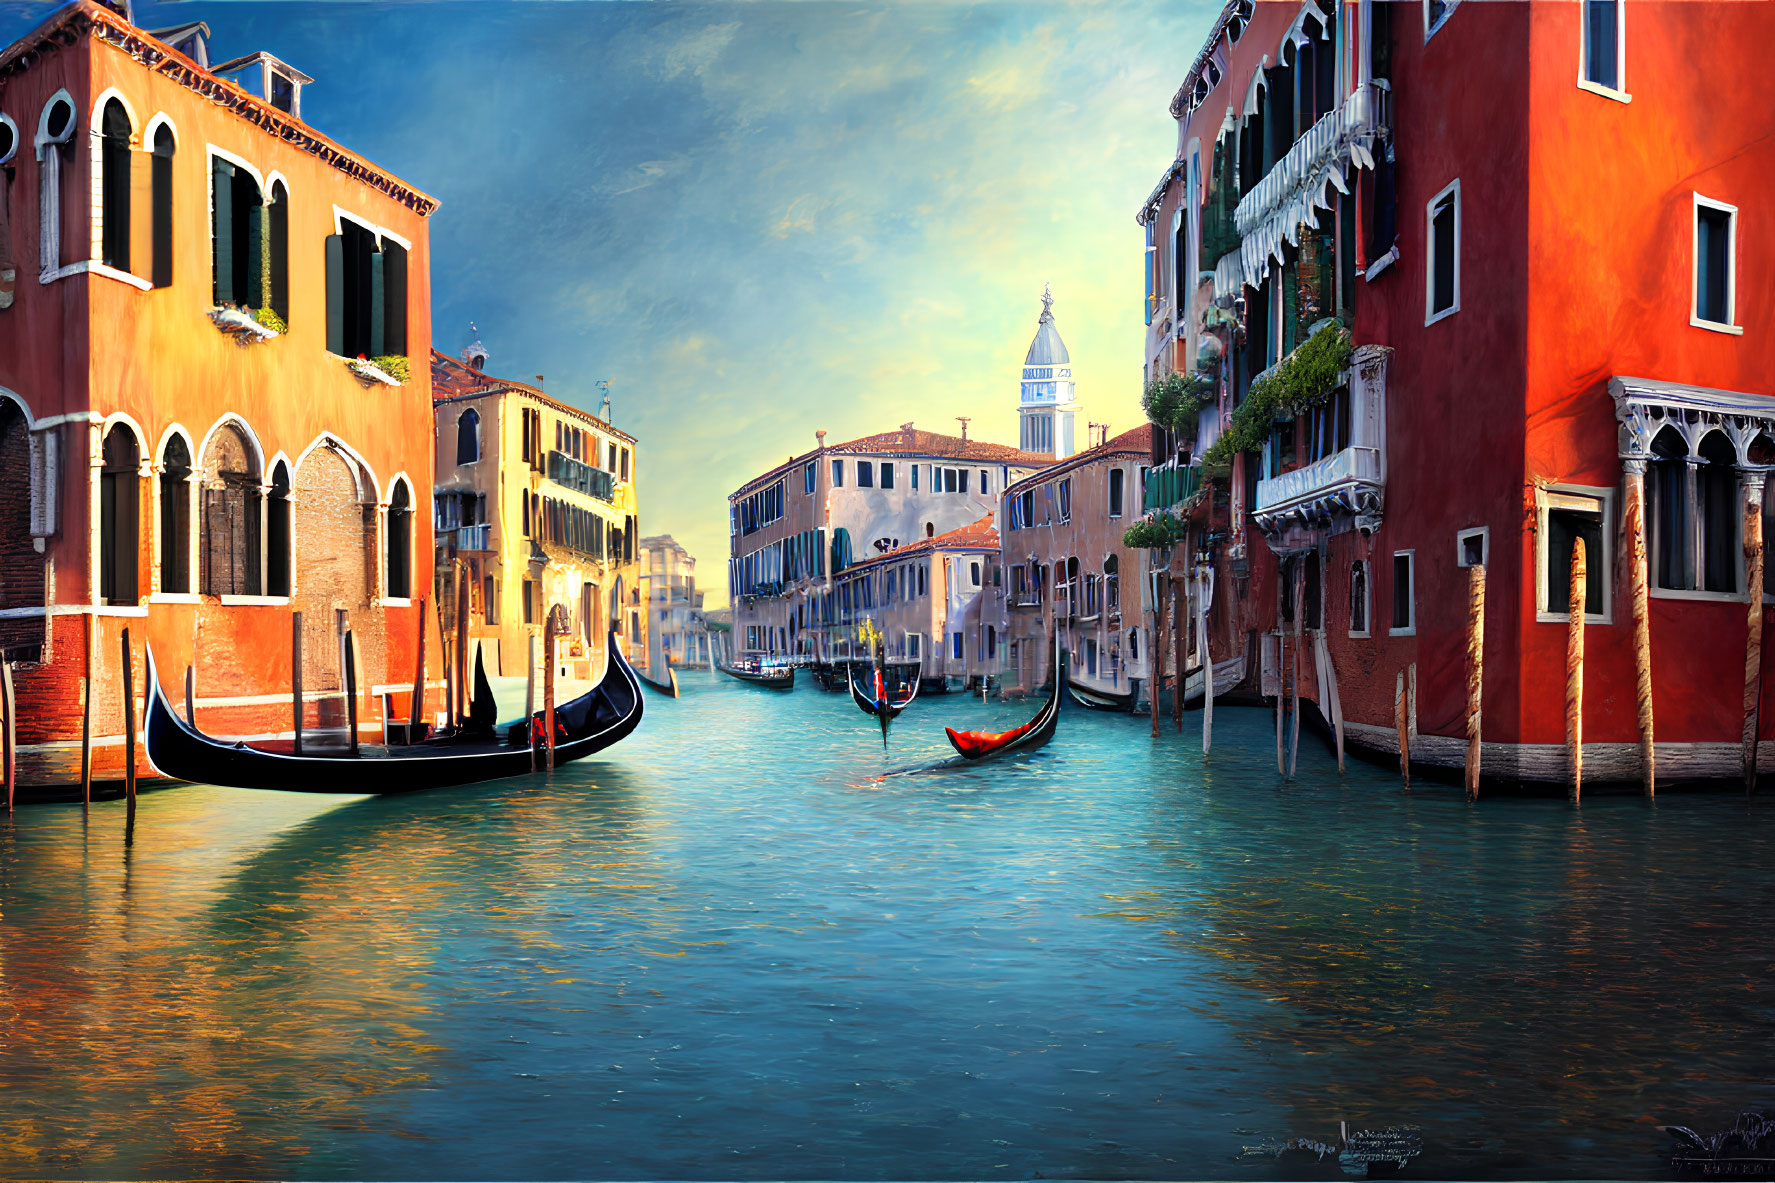 Historic buildings and gondolas on Venice canal